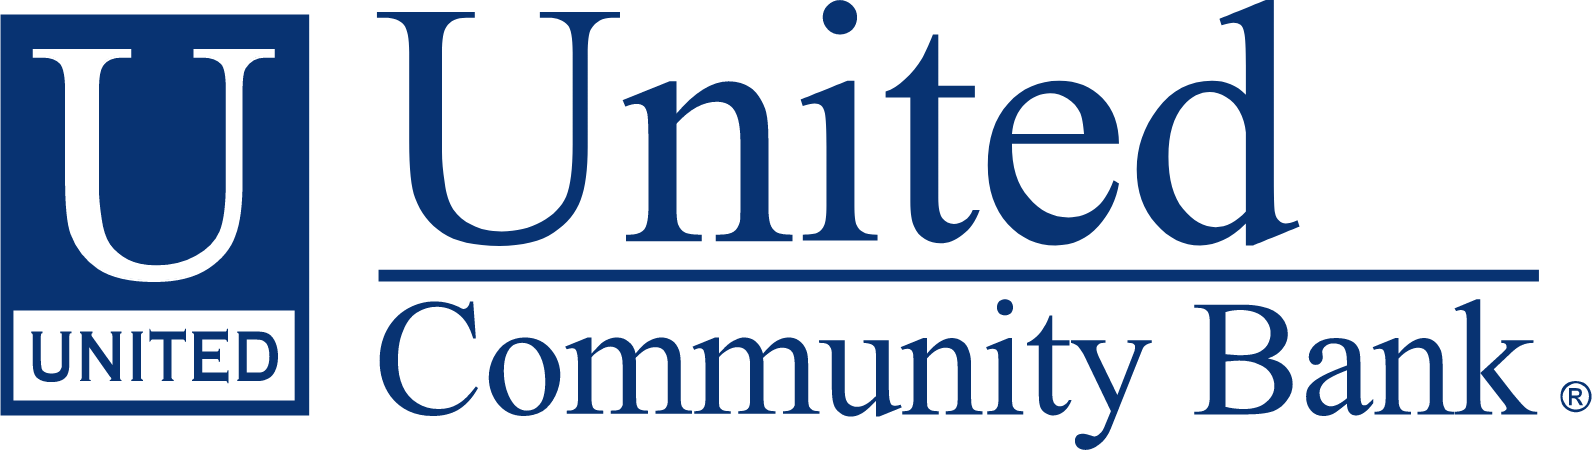 United Community Bank logo large (transparent PNG)